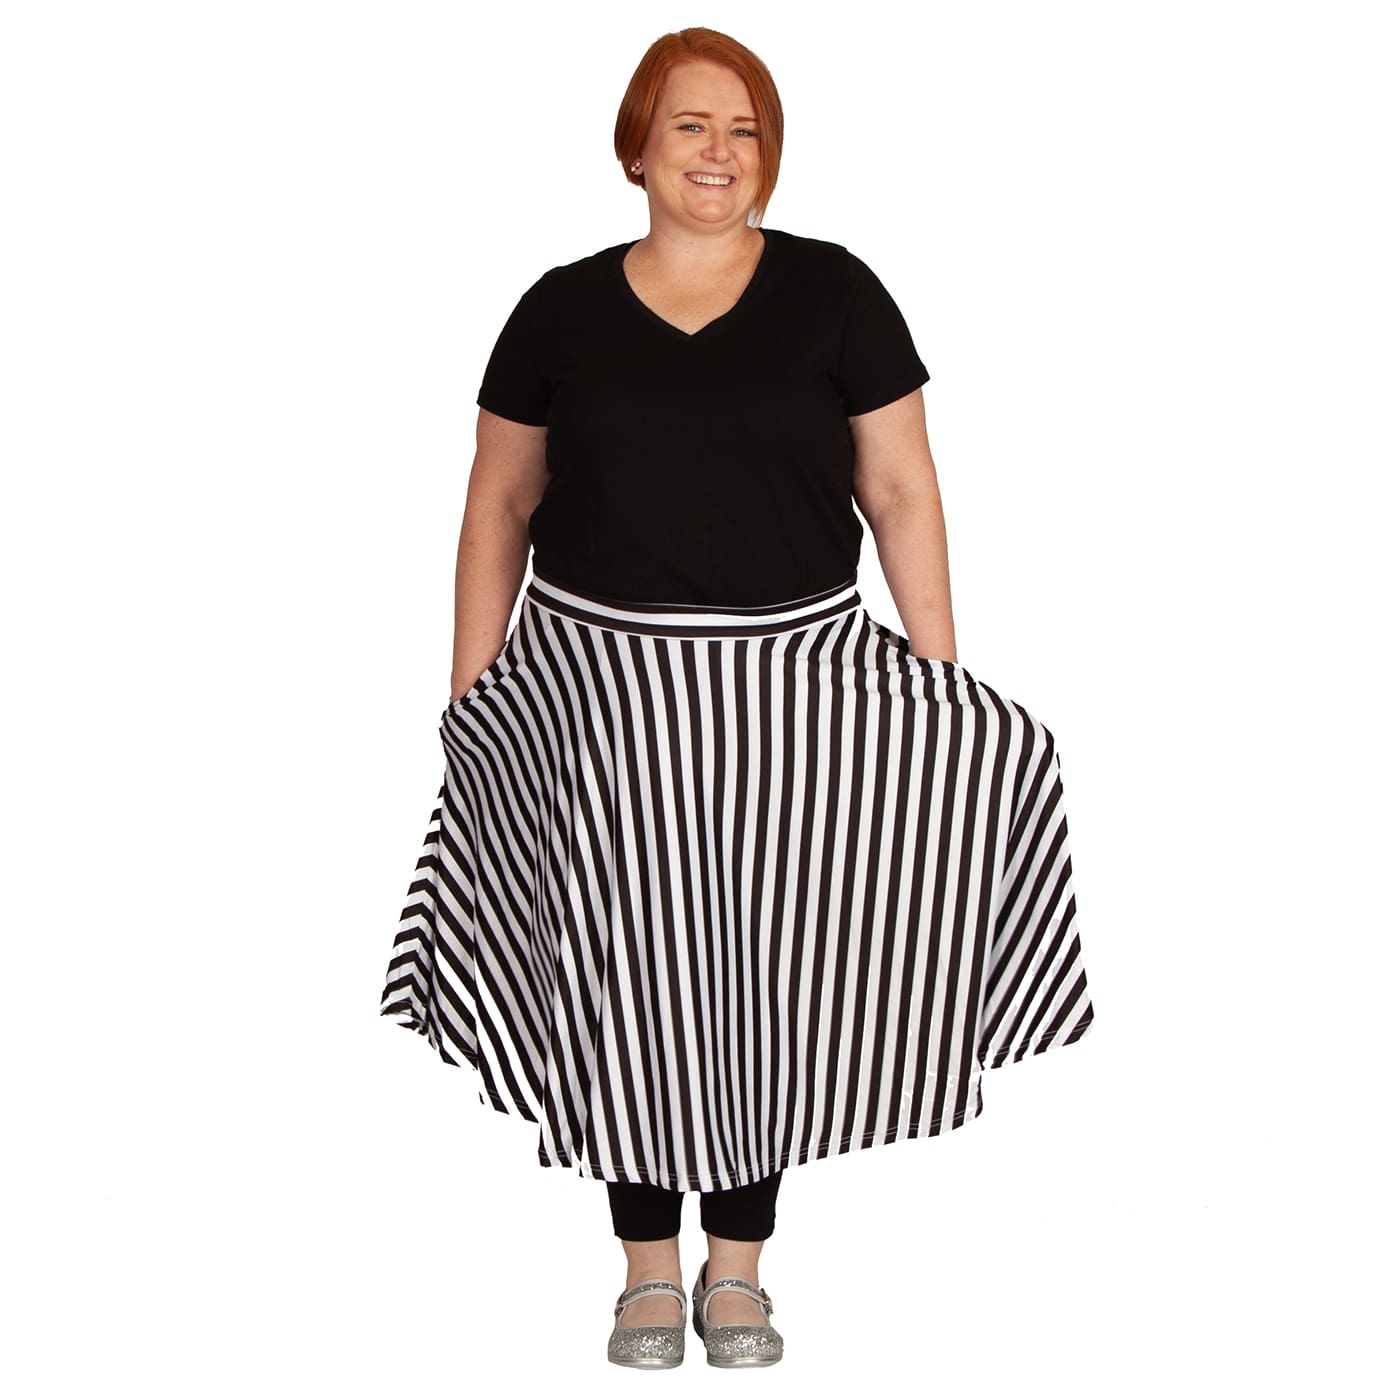 Zebra Swishy Skirt by RainbowsAndFairies.com.au (Black & White - Stripes - Monochrome - Classic - Circle Skirt With Pockets - Mod Retro - Animal Print) - SKU: CL_SWISH_ZEBRA_ORG - Pic-07